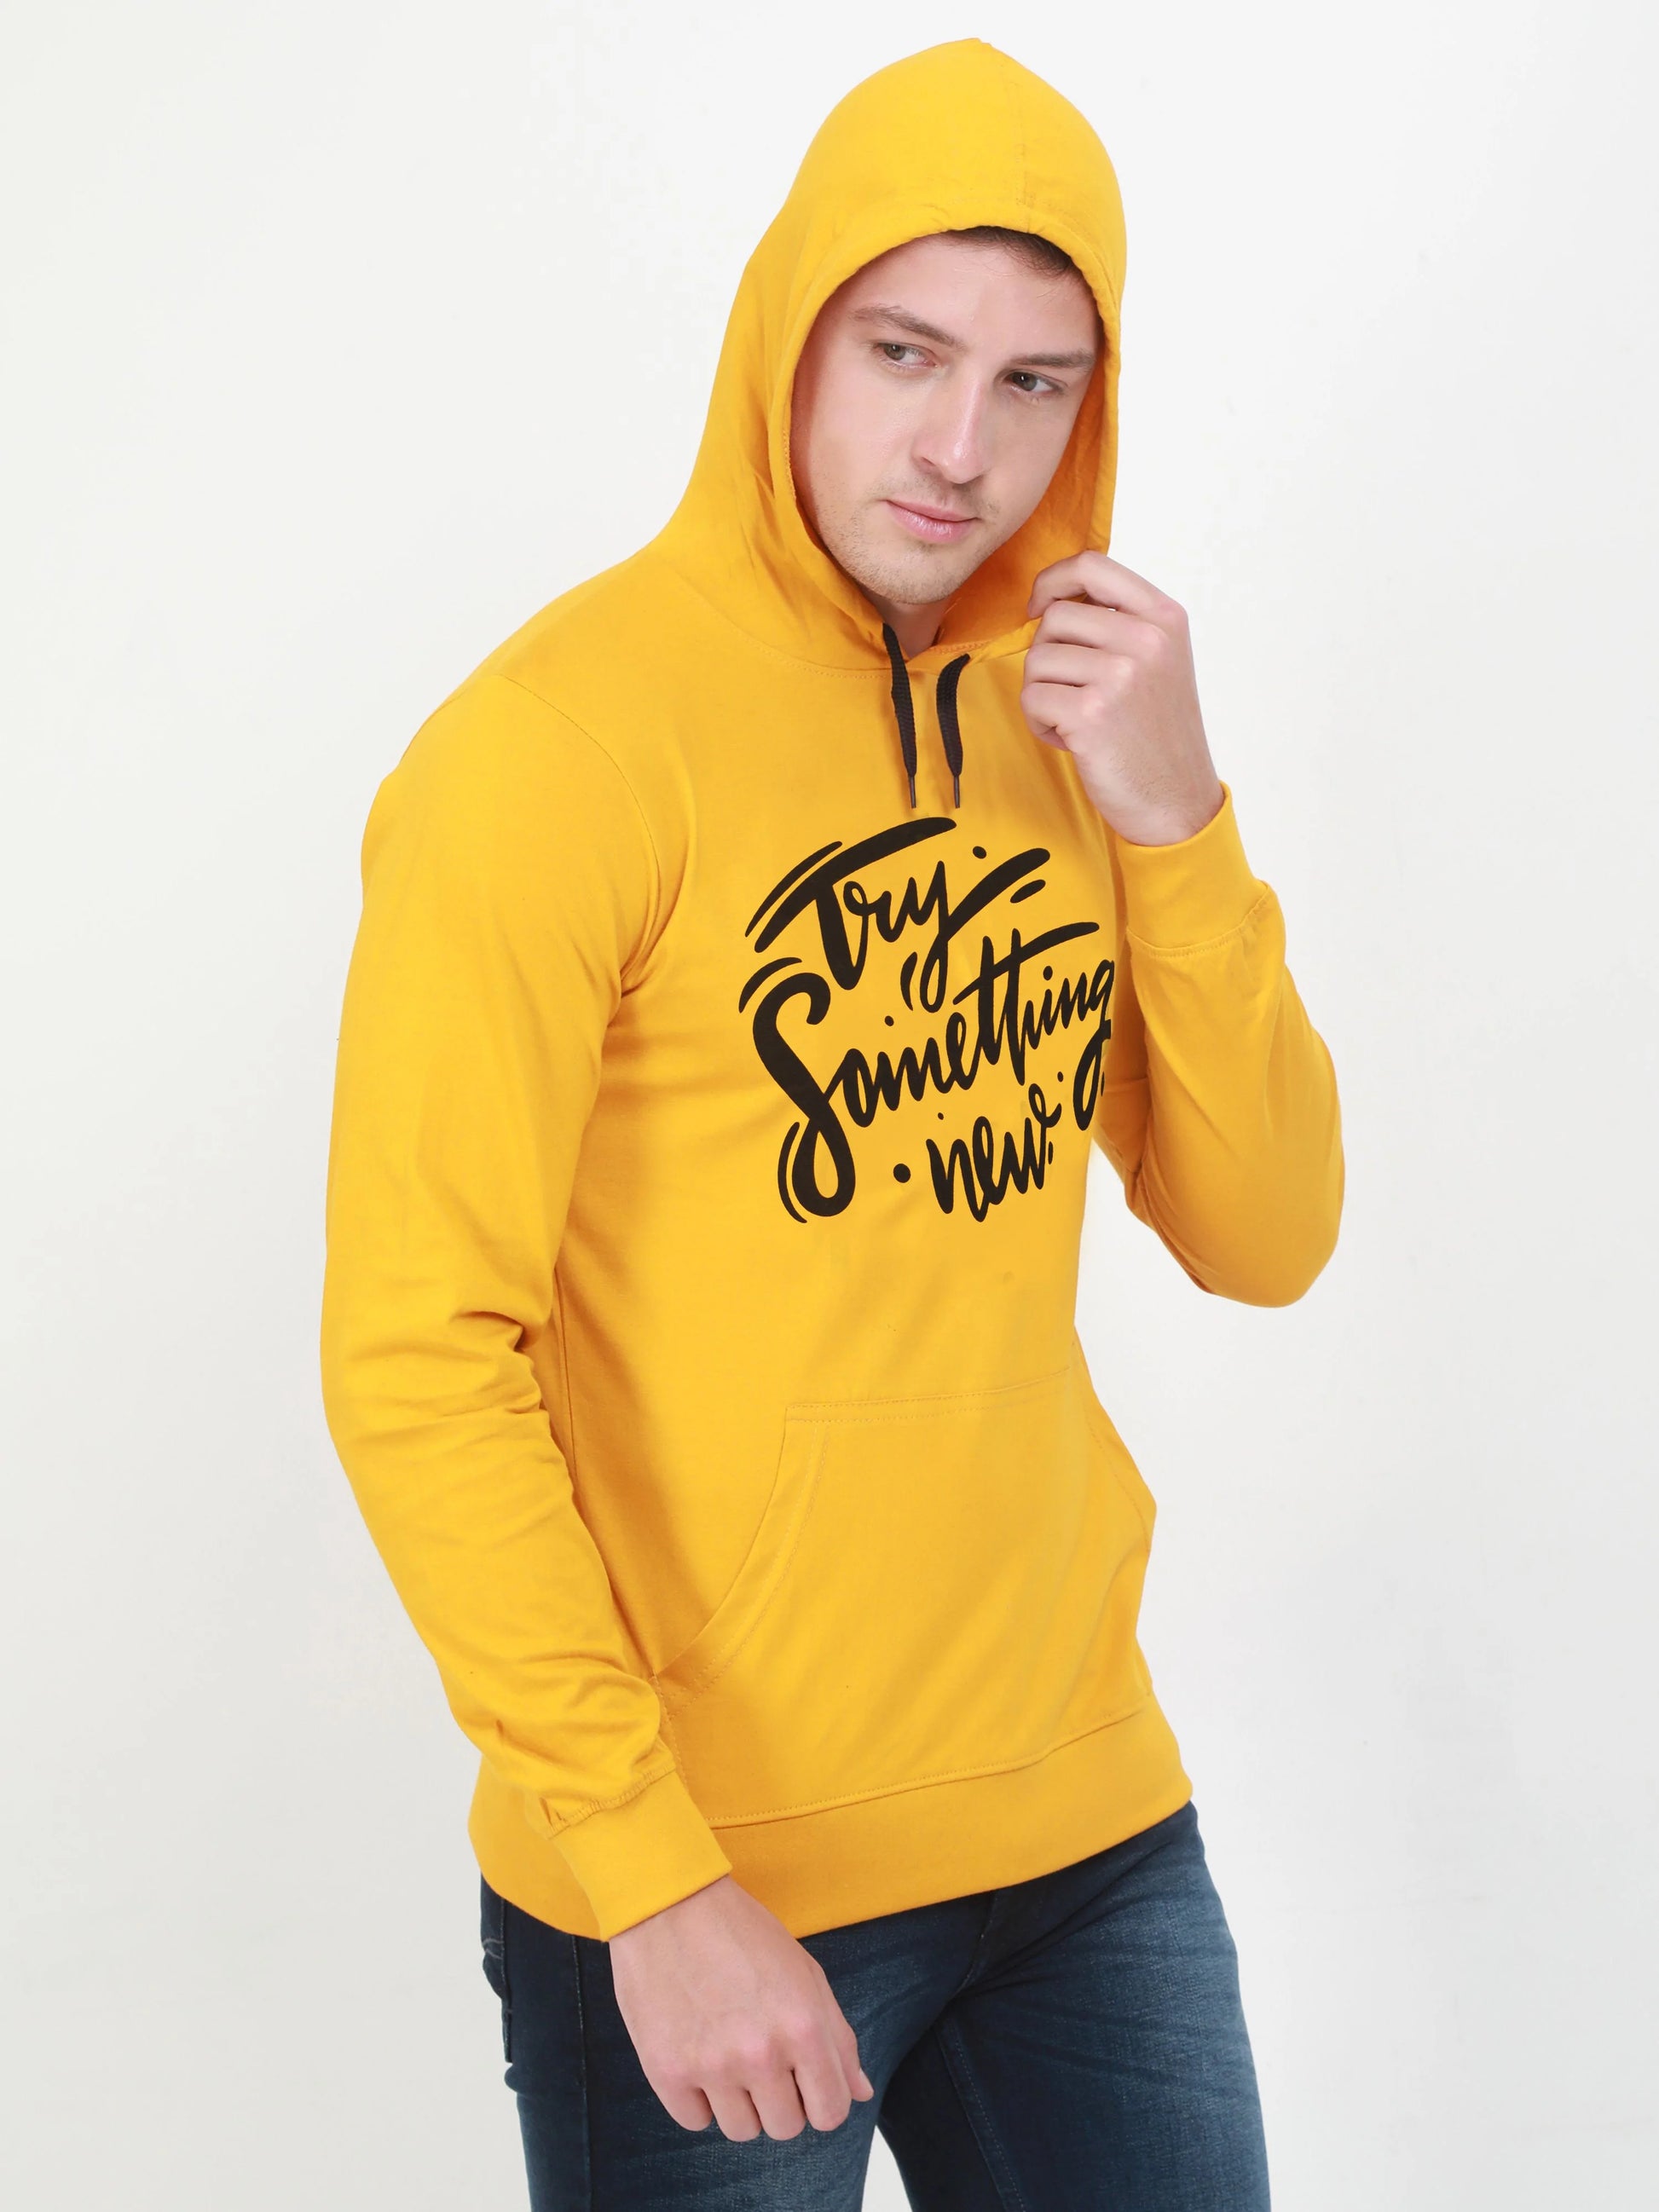 Fleximaa Men's Cotton Full Sleeve Printed Hoodies/Sweatshirts - fleximaa-so